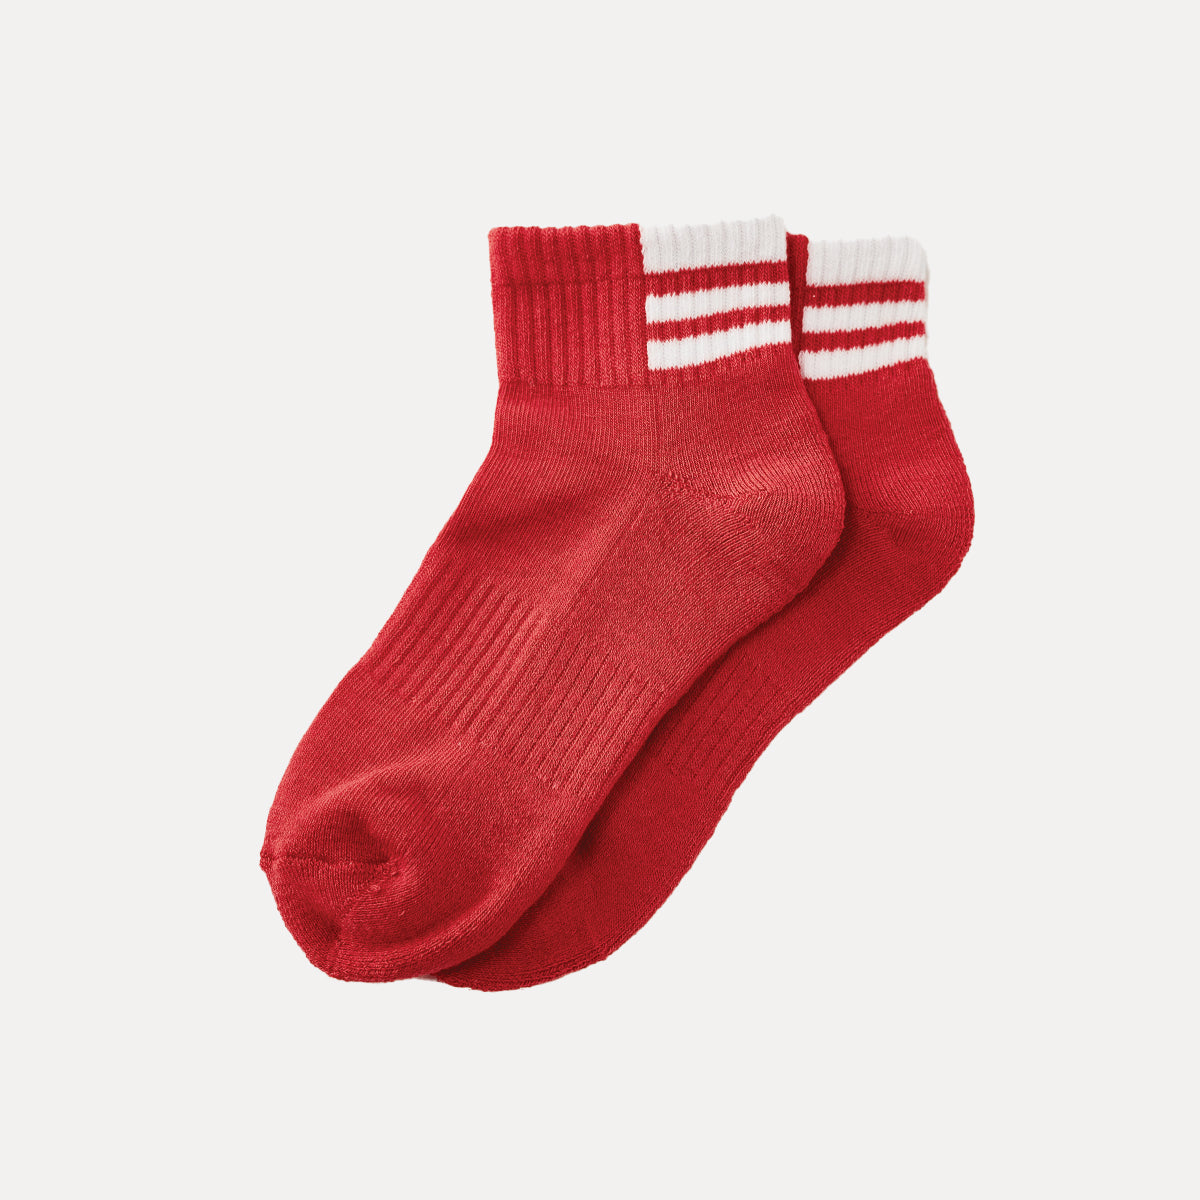 SOCKIC | Ankle Cushion Socks - Red/White